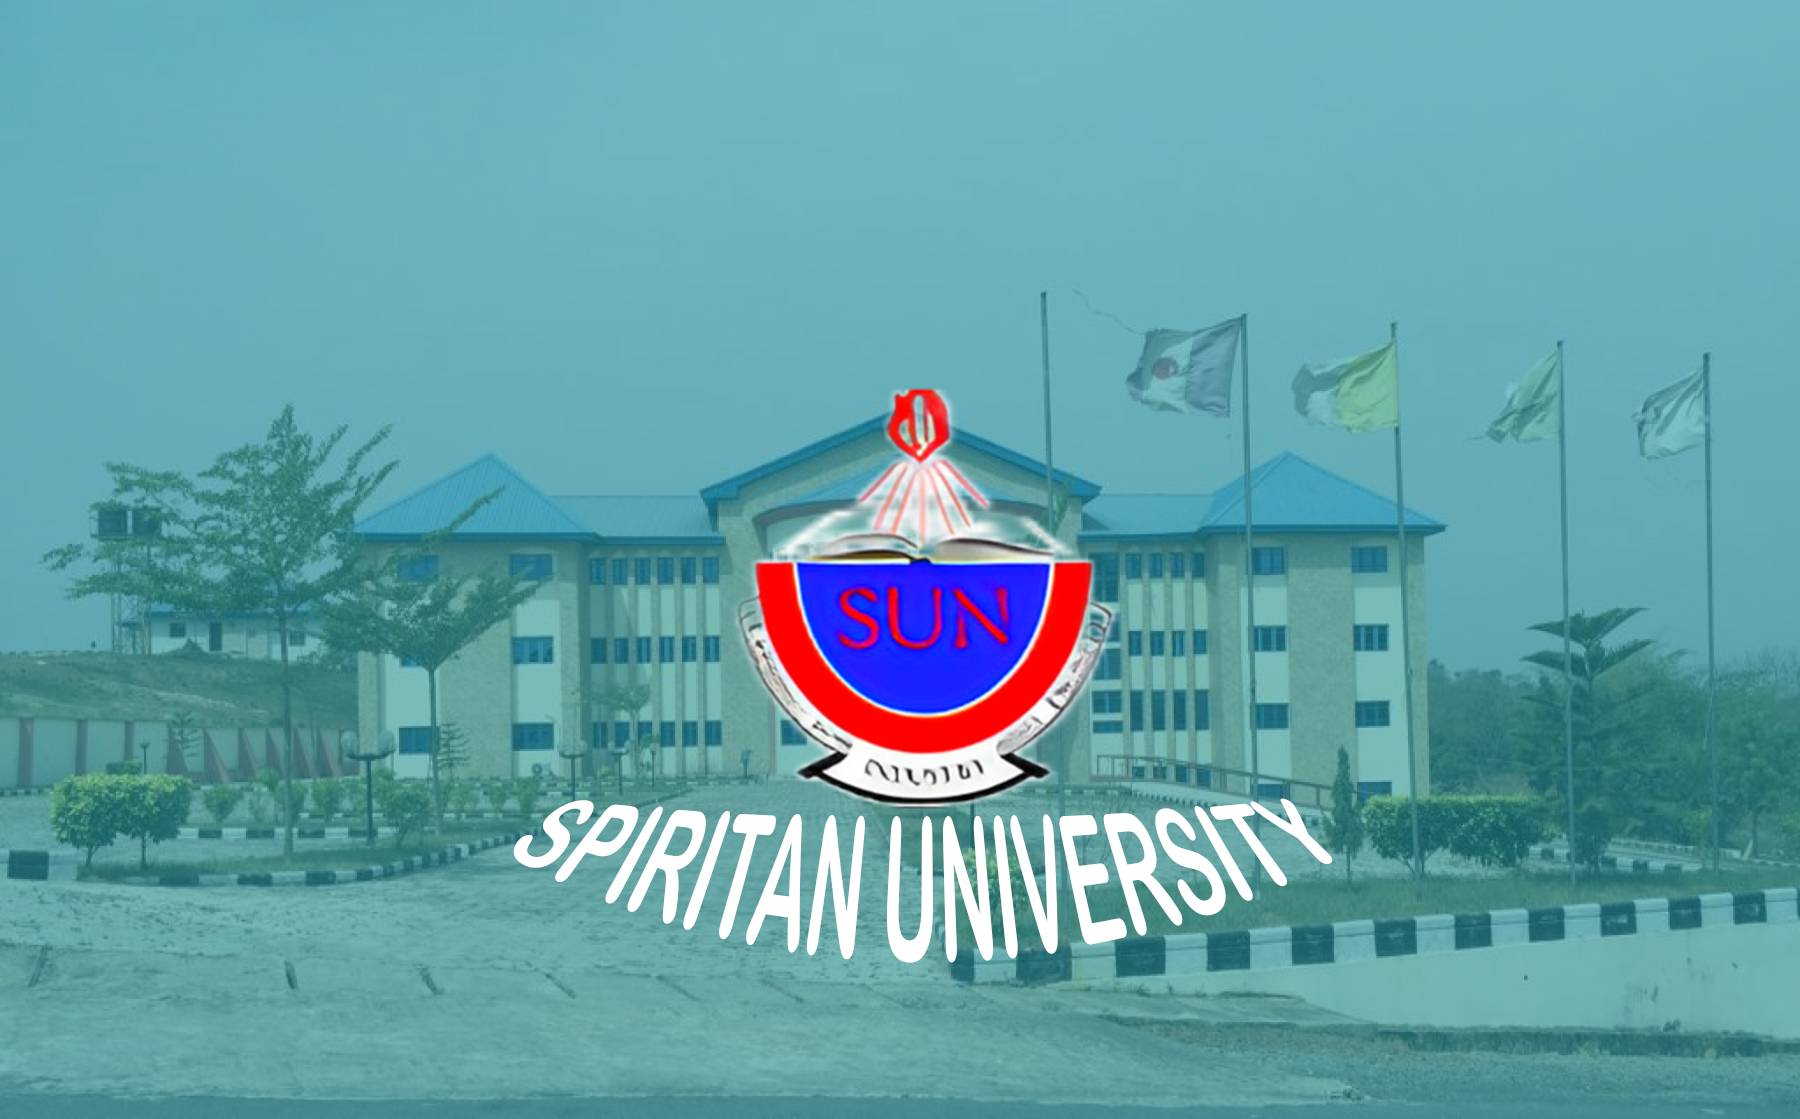 SUN ranked high in Nigeria University Ranking